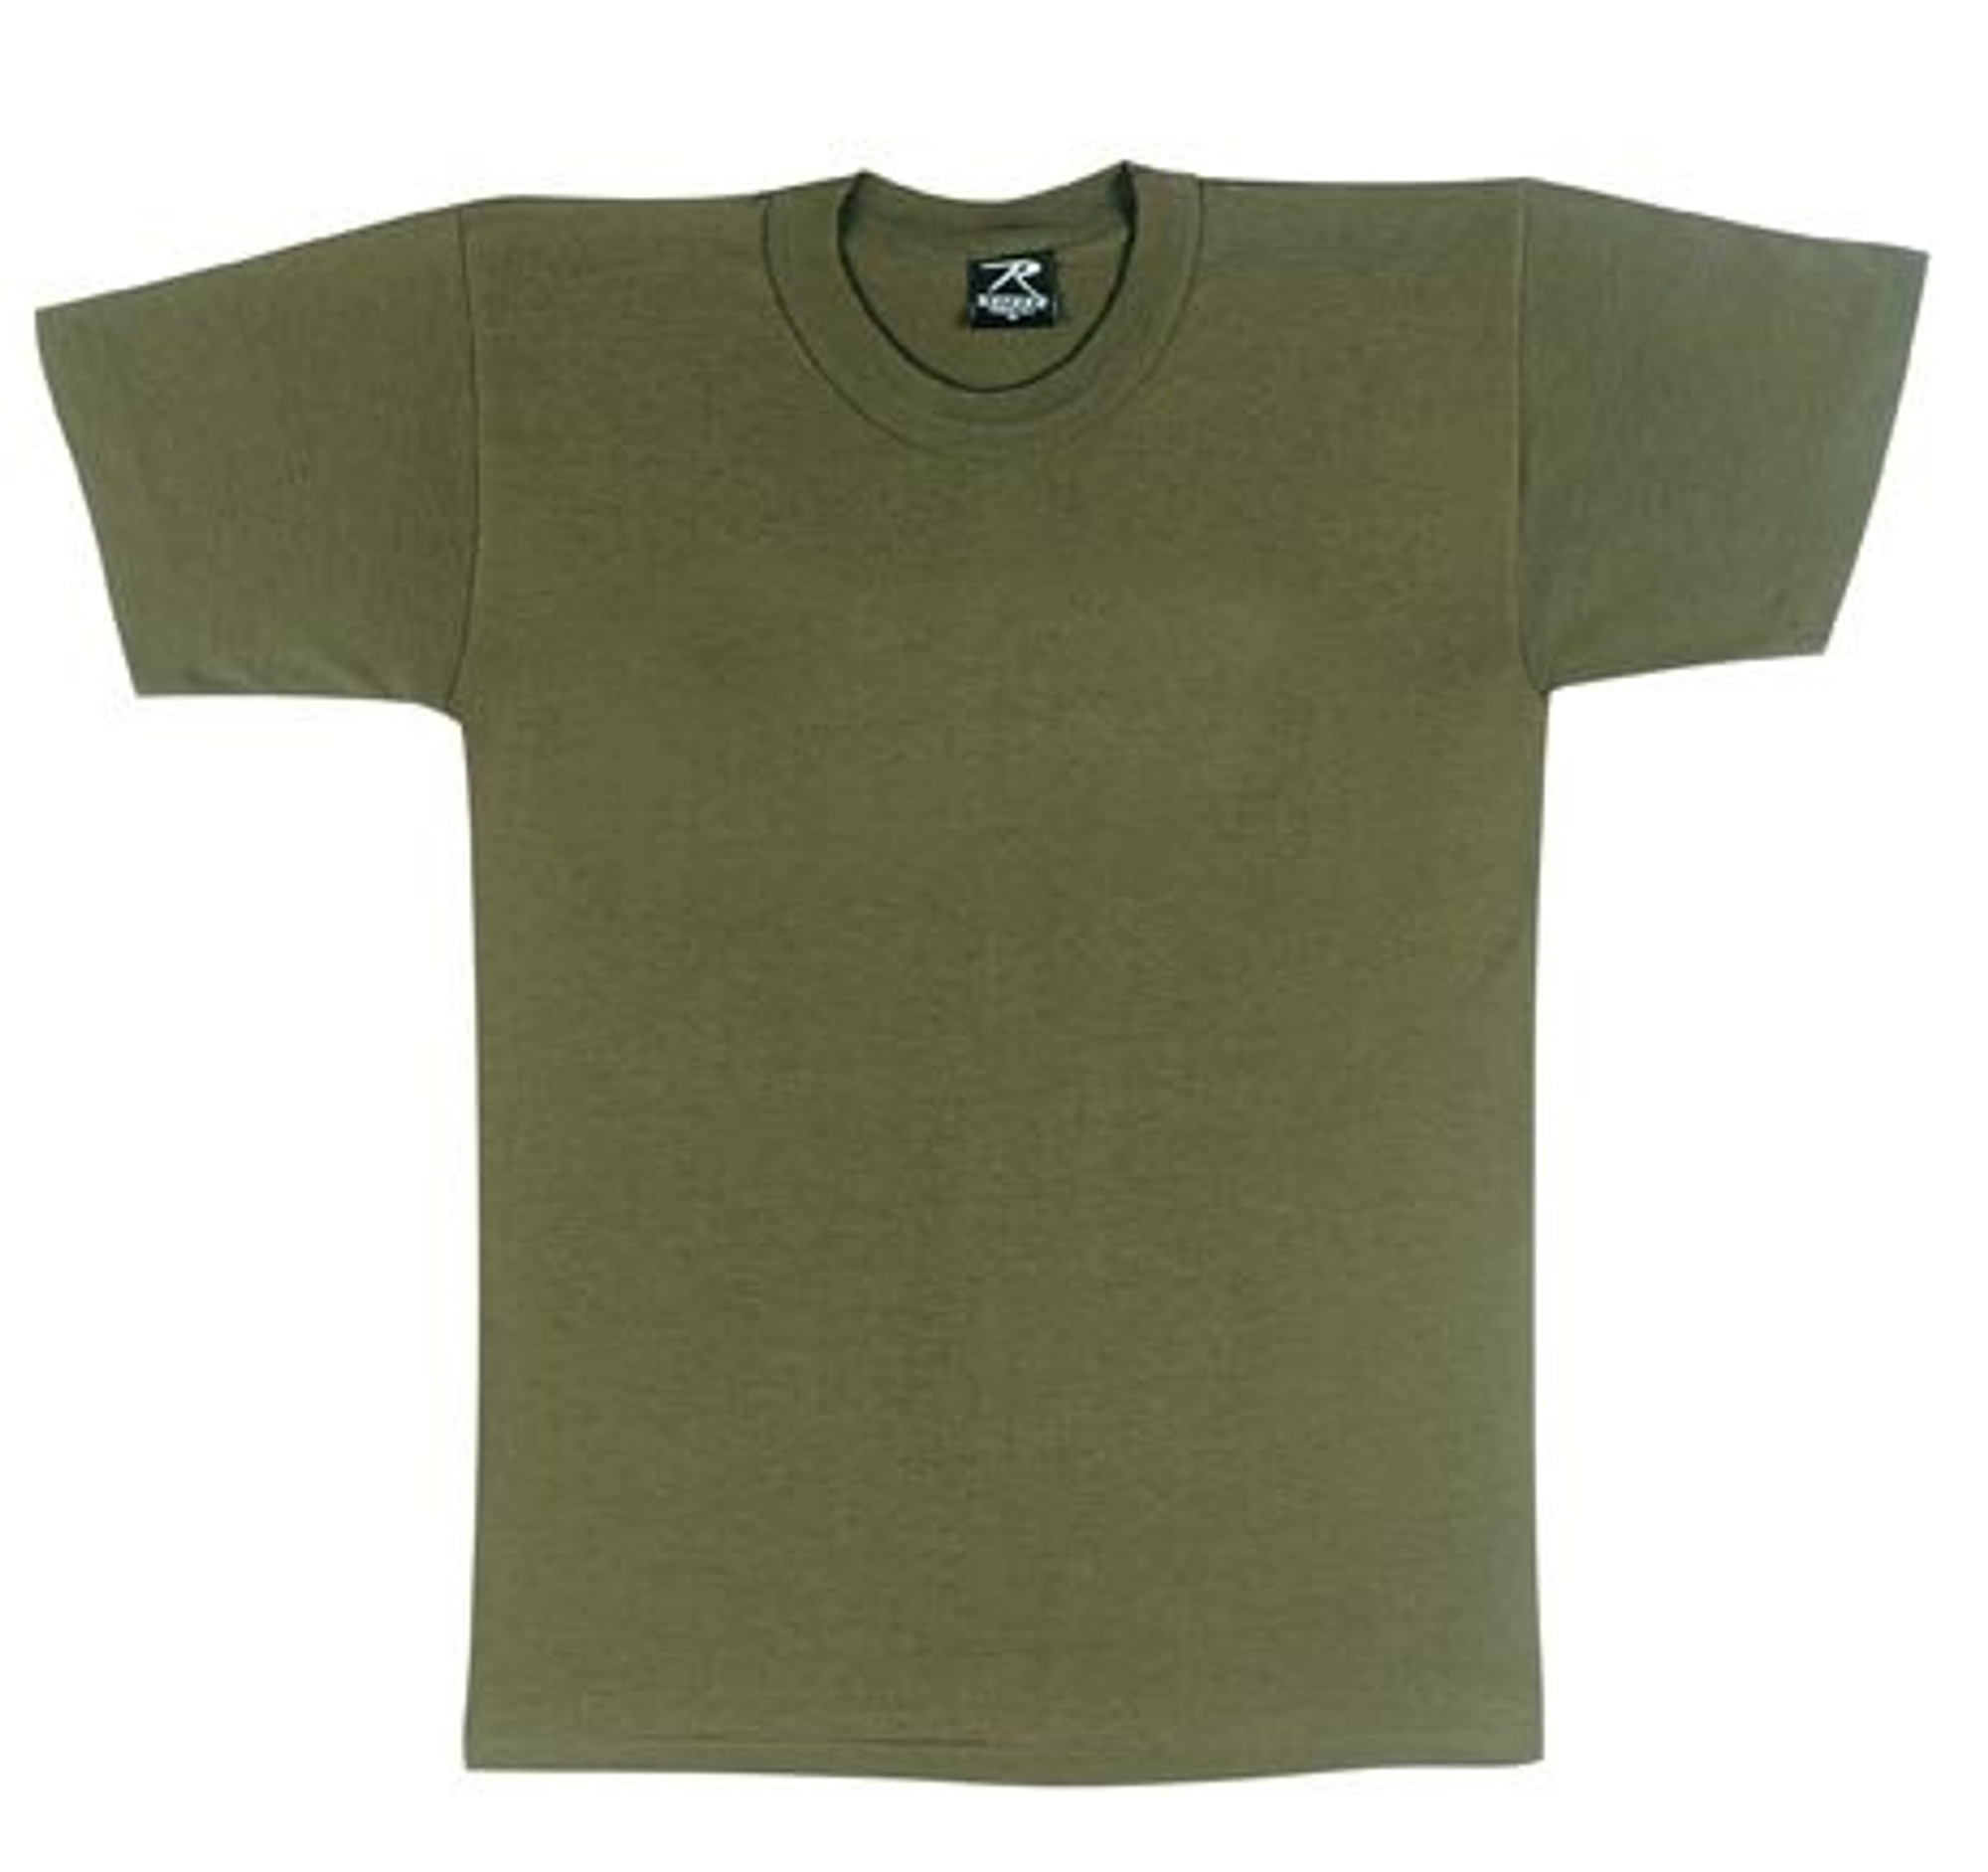 Rothco Kids T-Shirt - Olive Drab